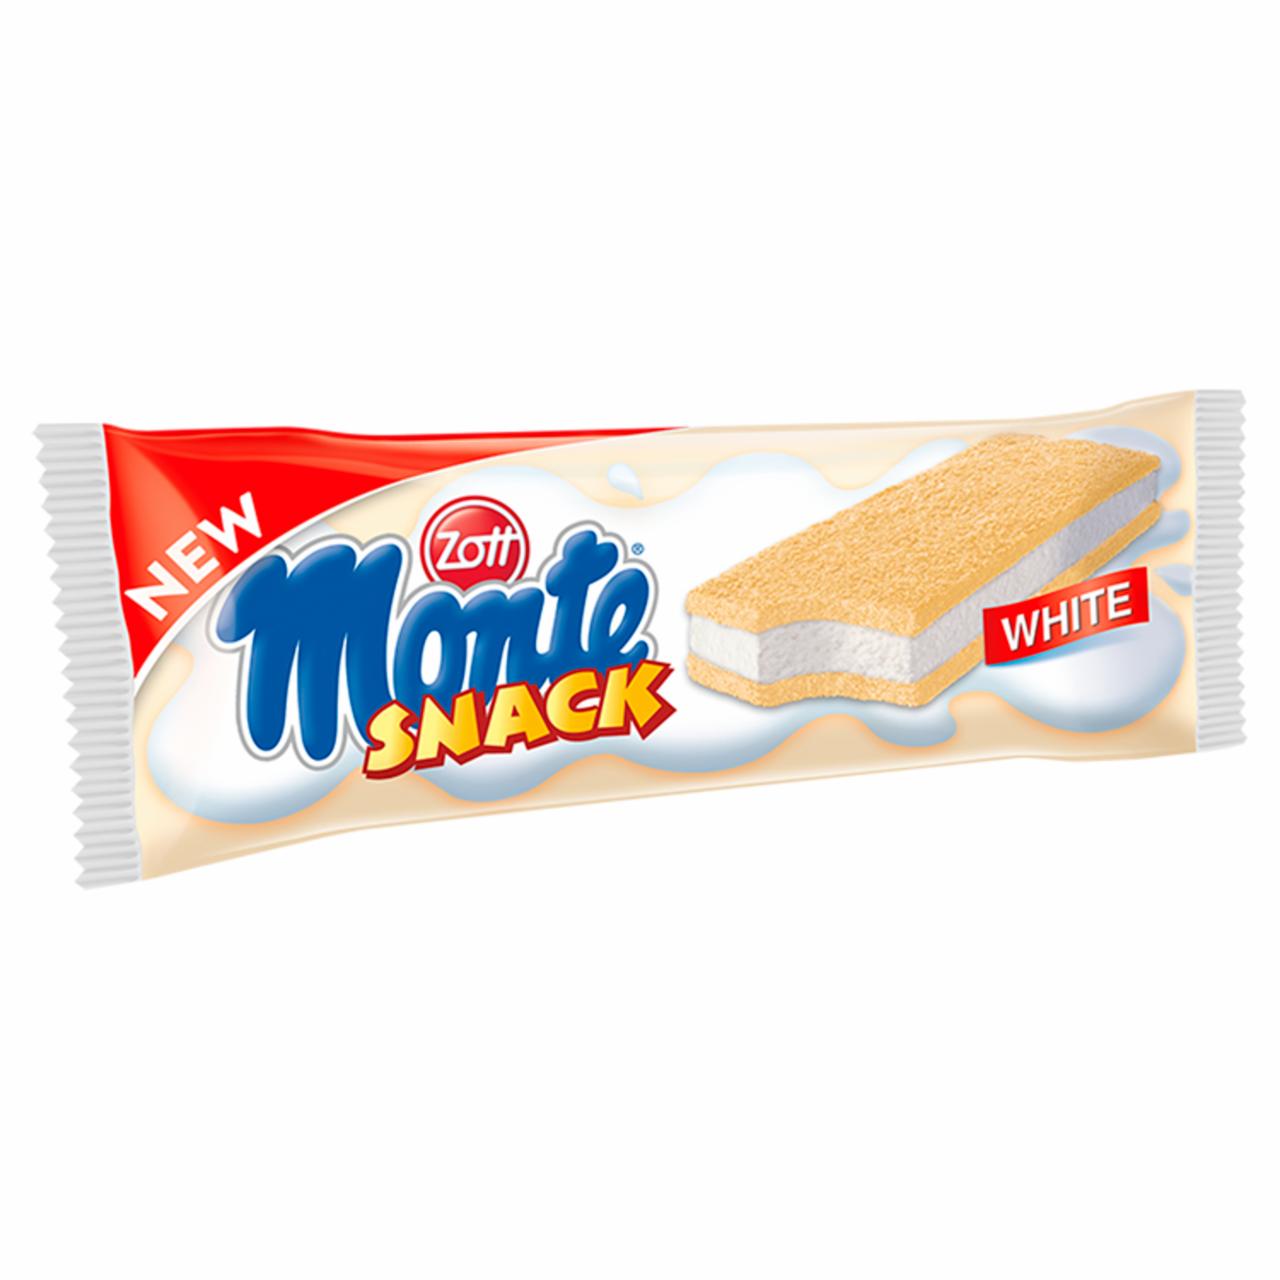 Zdjęcia - Zott Monte White Snack Ciastko z kremem mlecznym 29 g